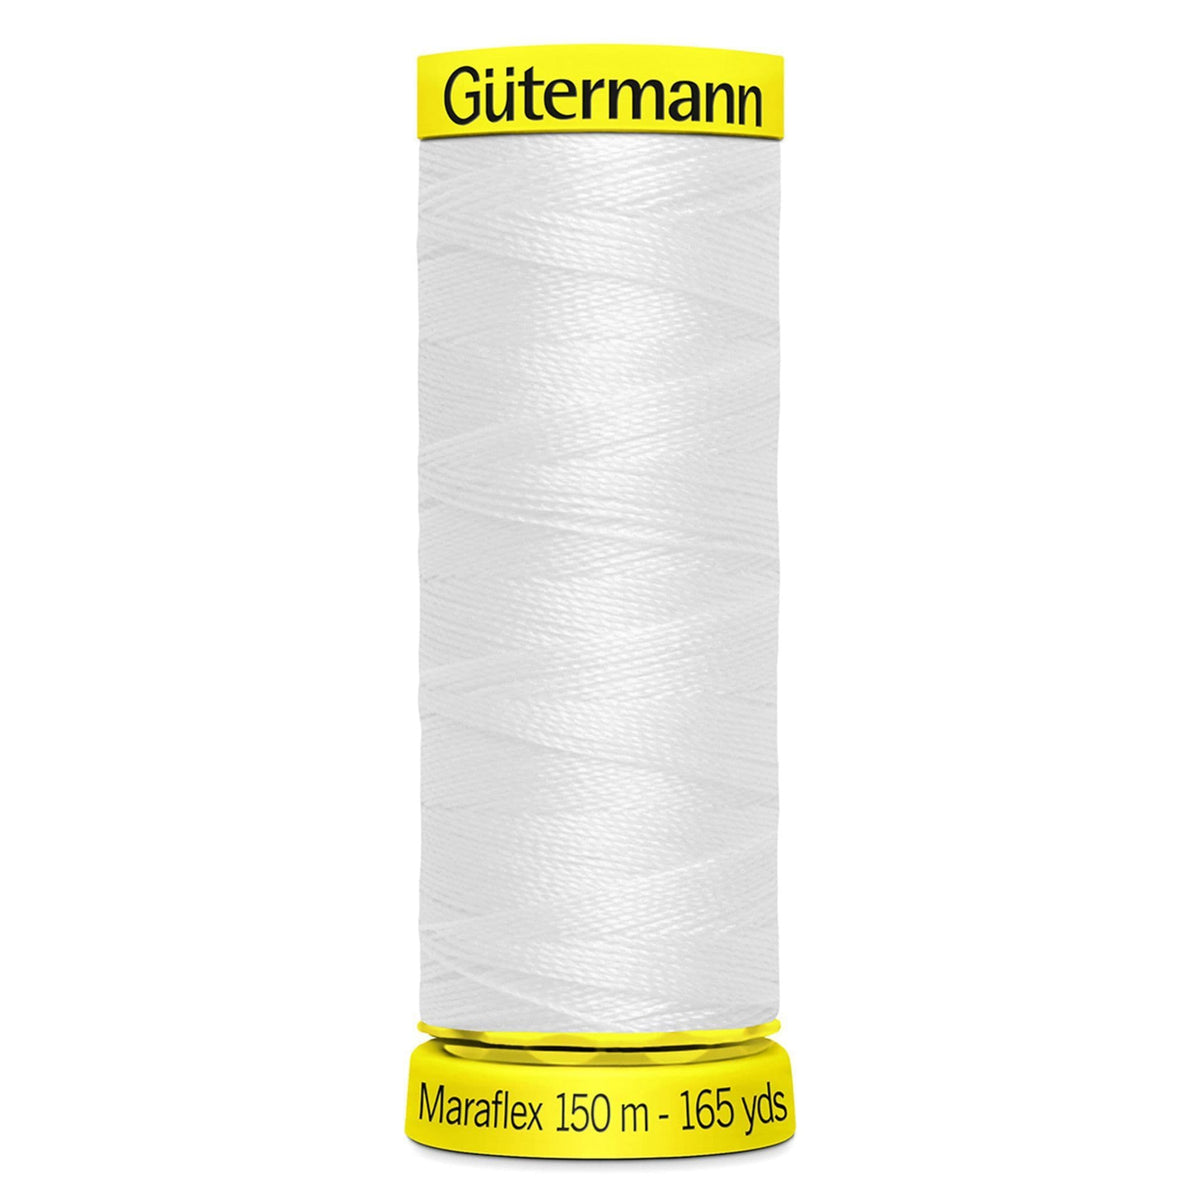 Gutermann Maraflex - White 150m - Stretch Thread